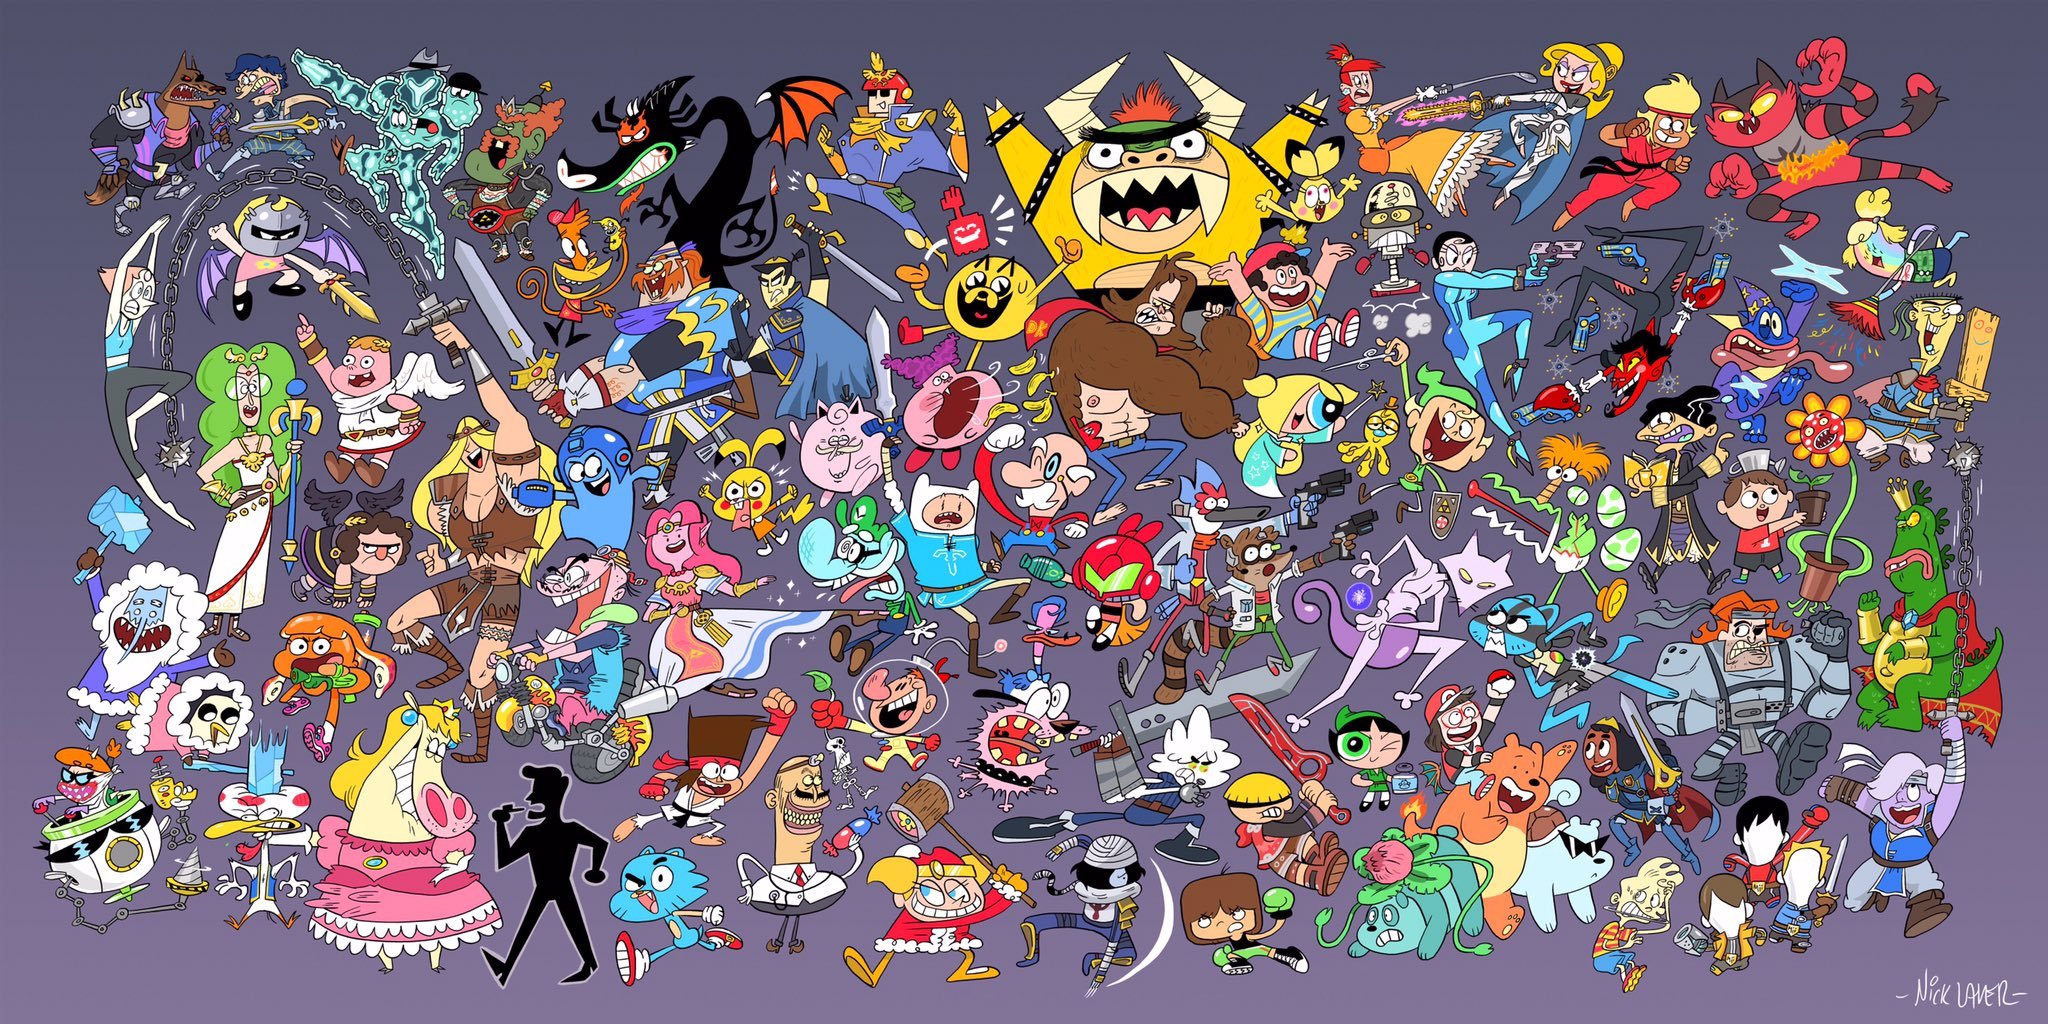 Cartoon Network: Battle Crashers for Nintendo Switch - Nintendo Official  Site